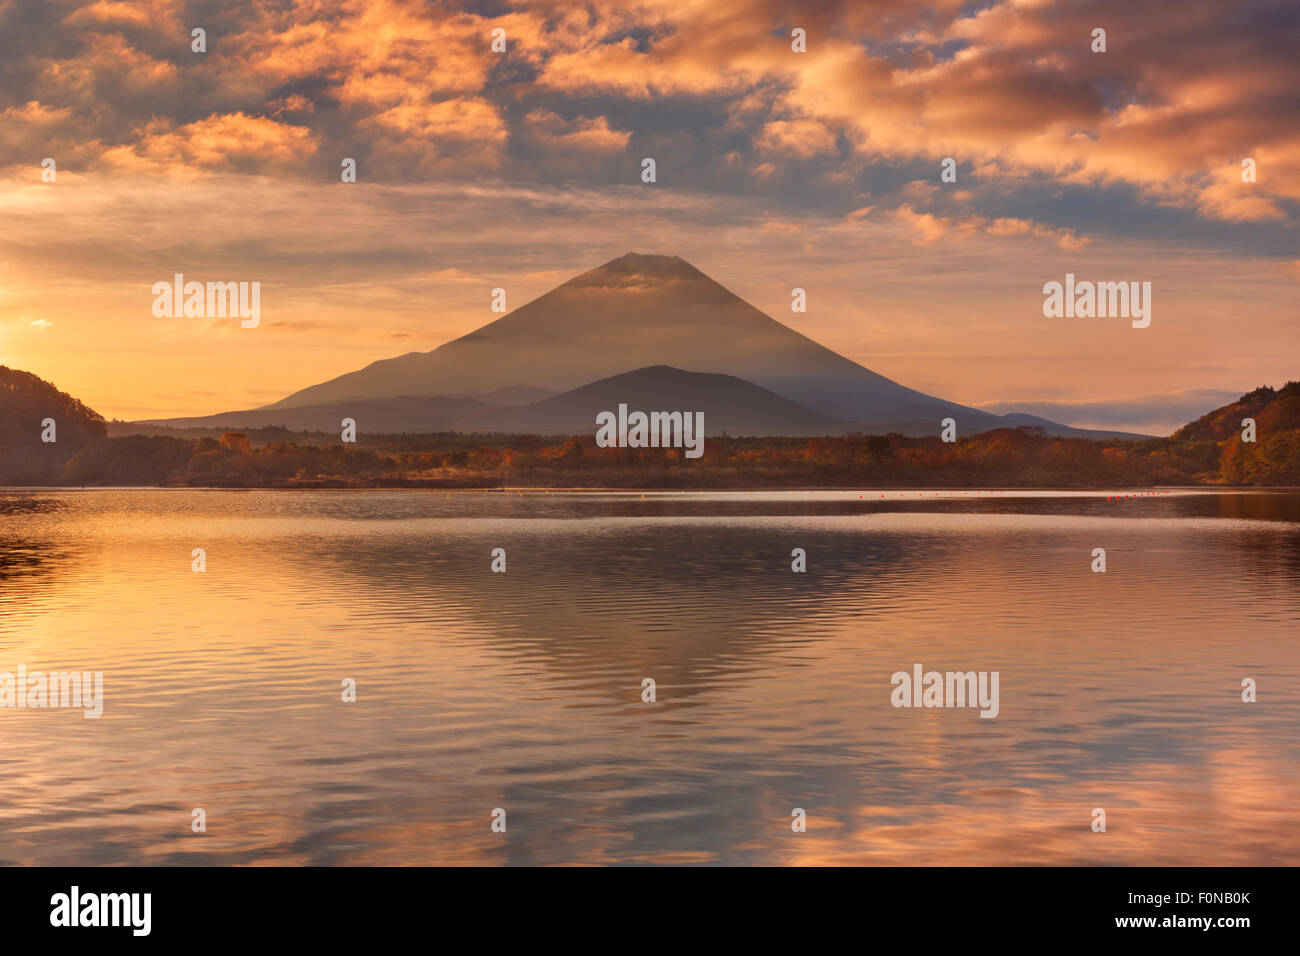 Mount Fuji (Fujisan, 富士山) photographed at sunrise from Lake Shoji (Shojiko, 精進湖). Stock Photo